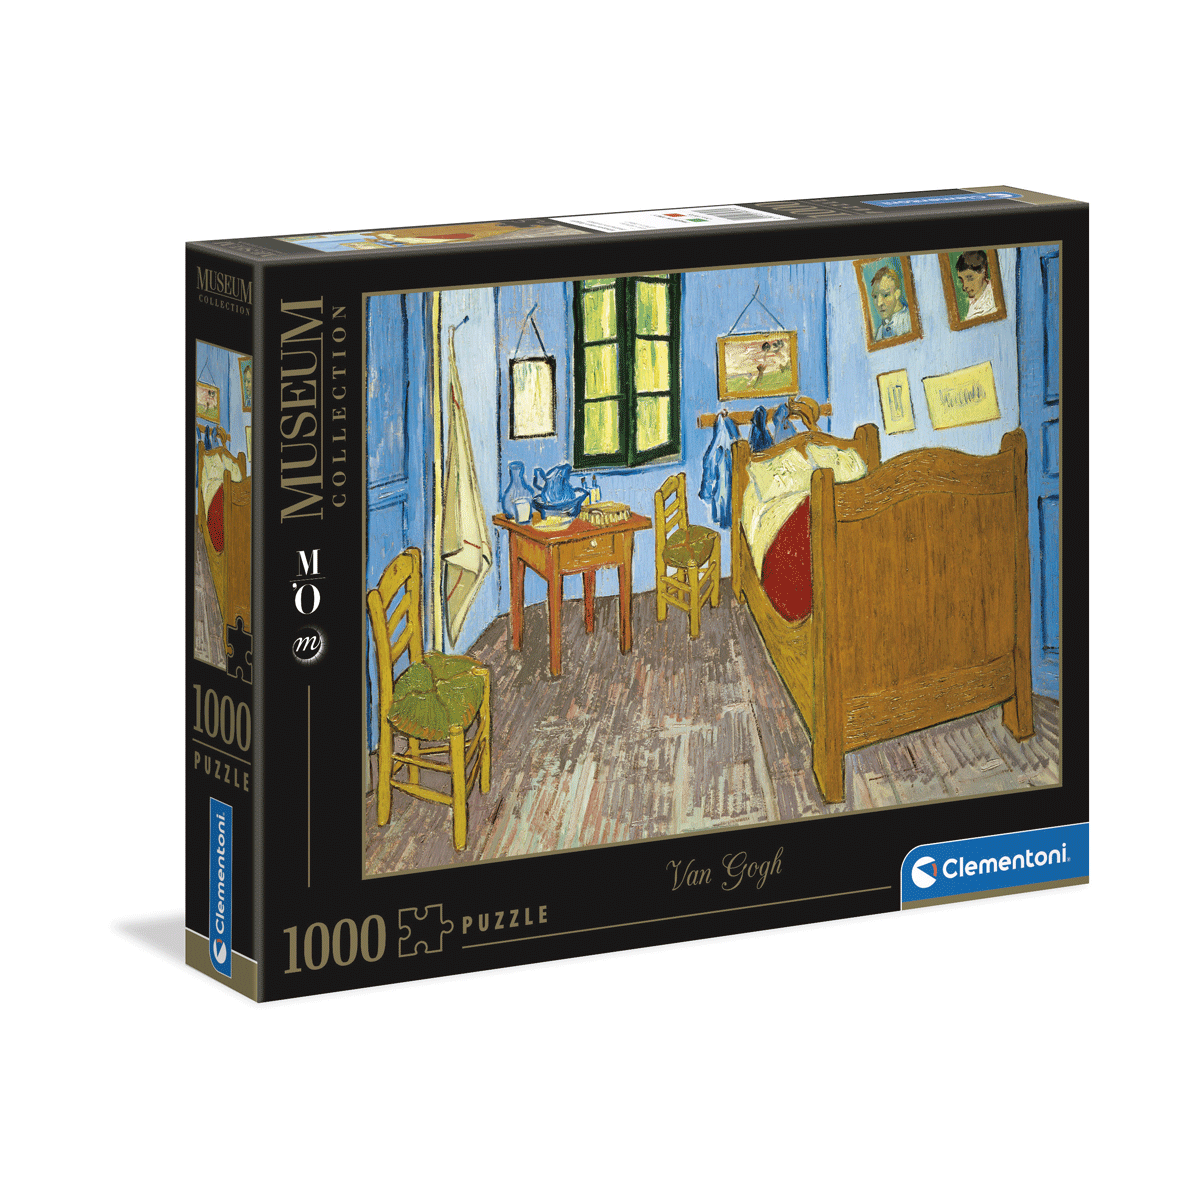 Clementoni puzzle museum collection - van gogh, "bedroom in arles" - 1000 pezzi, puzzle adulti - CLEMENTONI